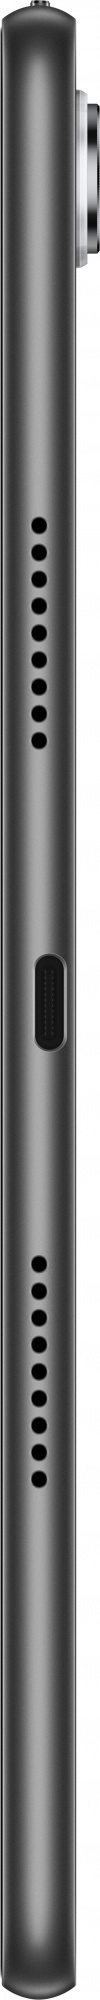 Huawei MatePad Air LTE 8/256GB, с клавиатурой